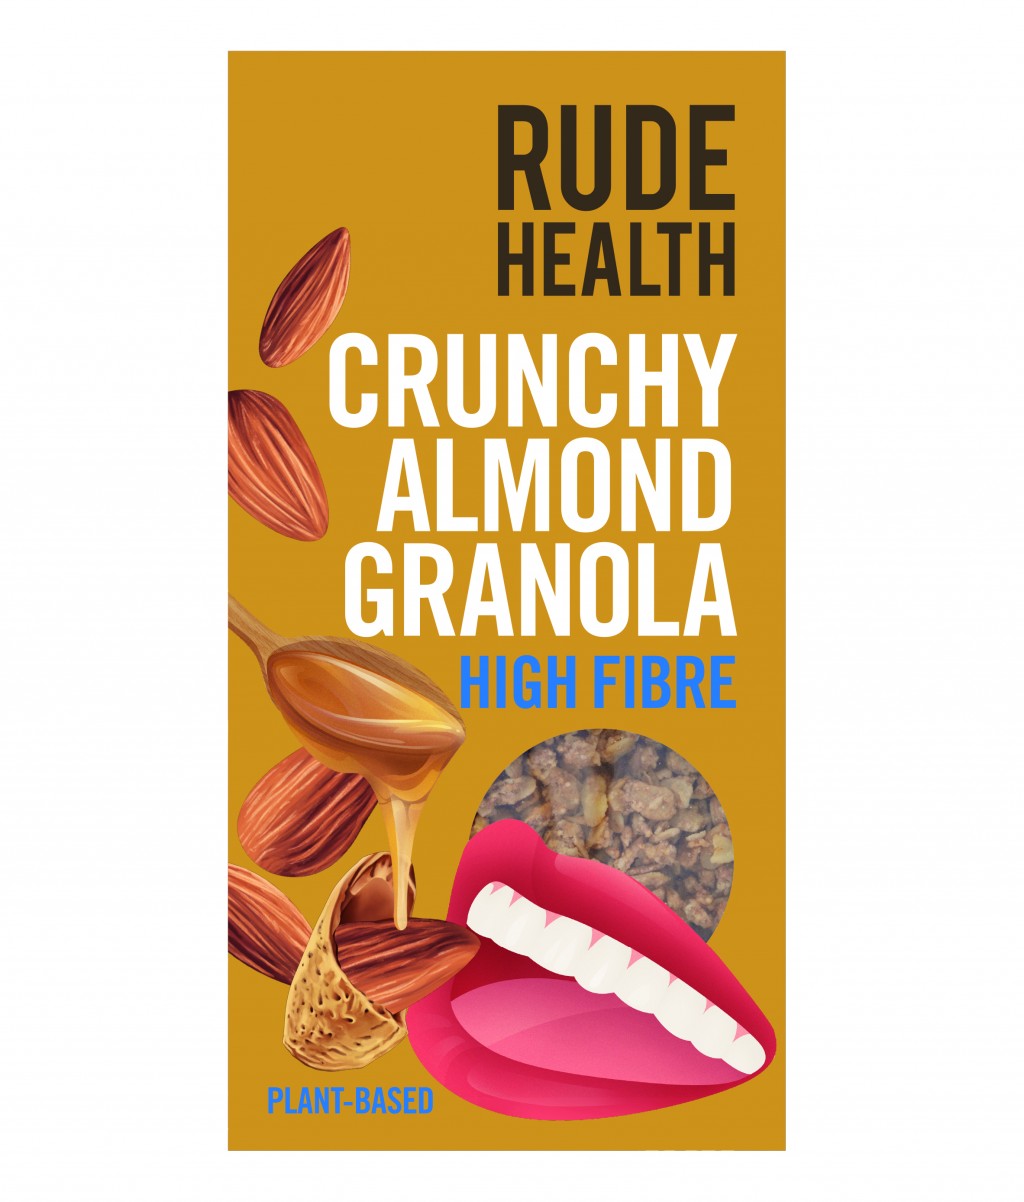 RUDE HEALTH Crunchy Almond Granola